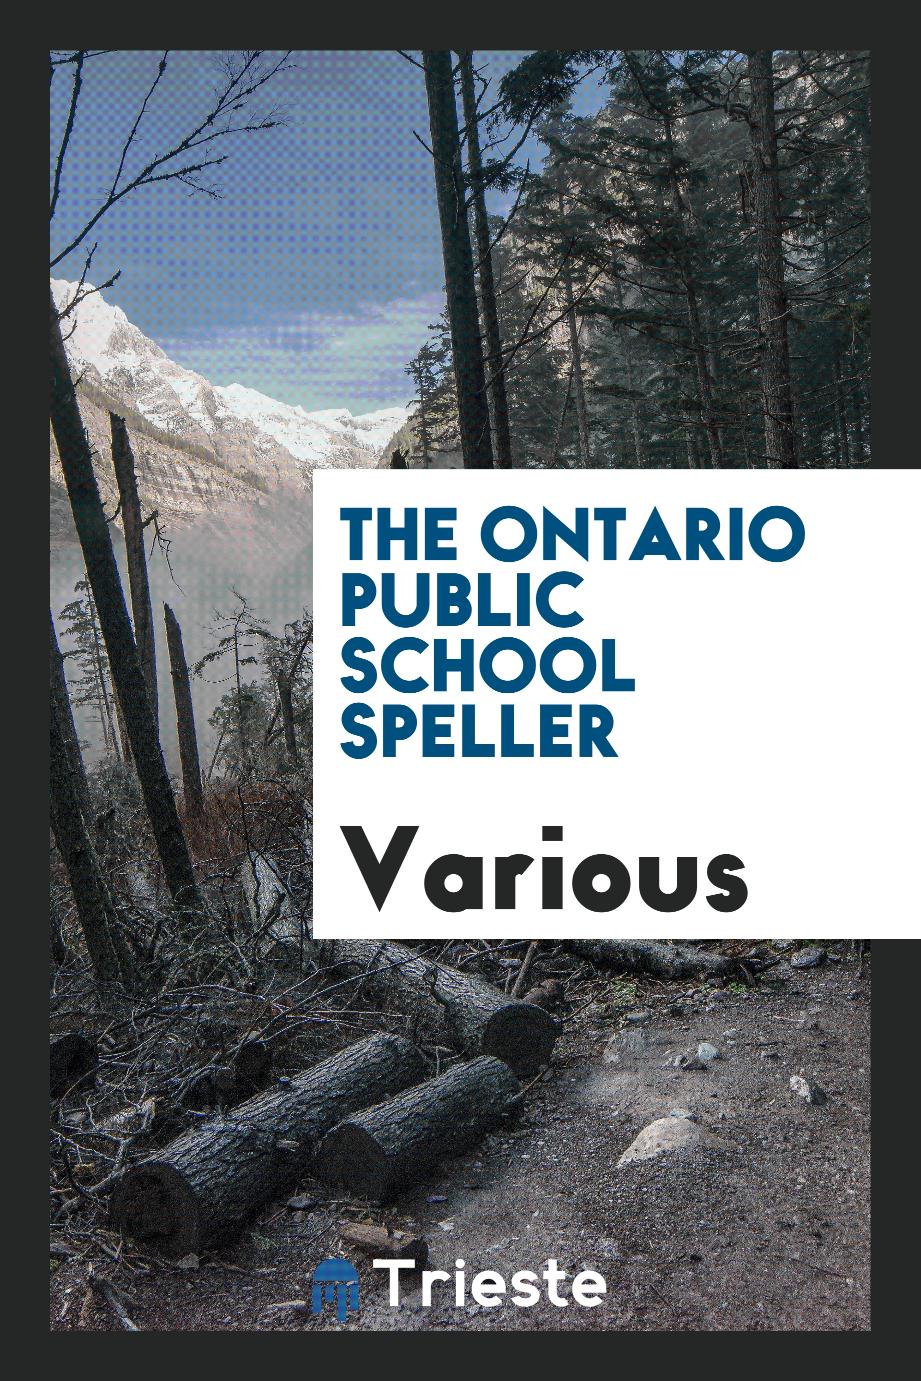 The Ontario public school speller